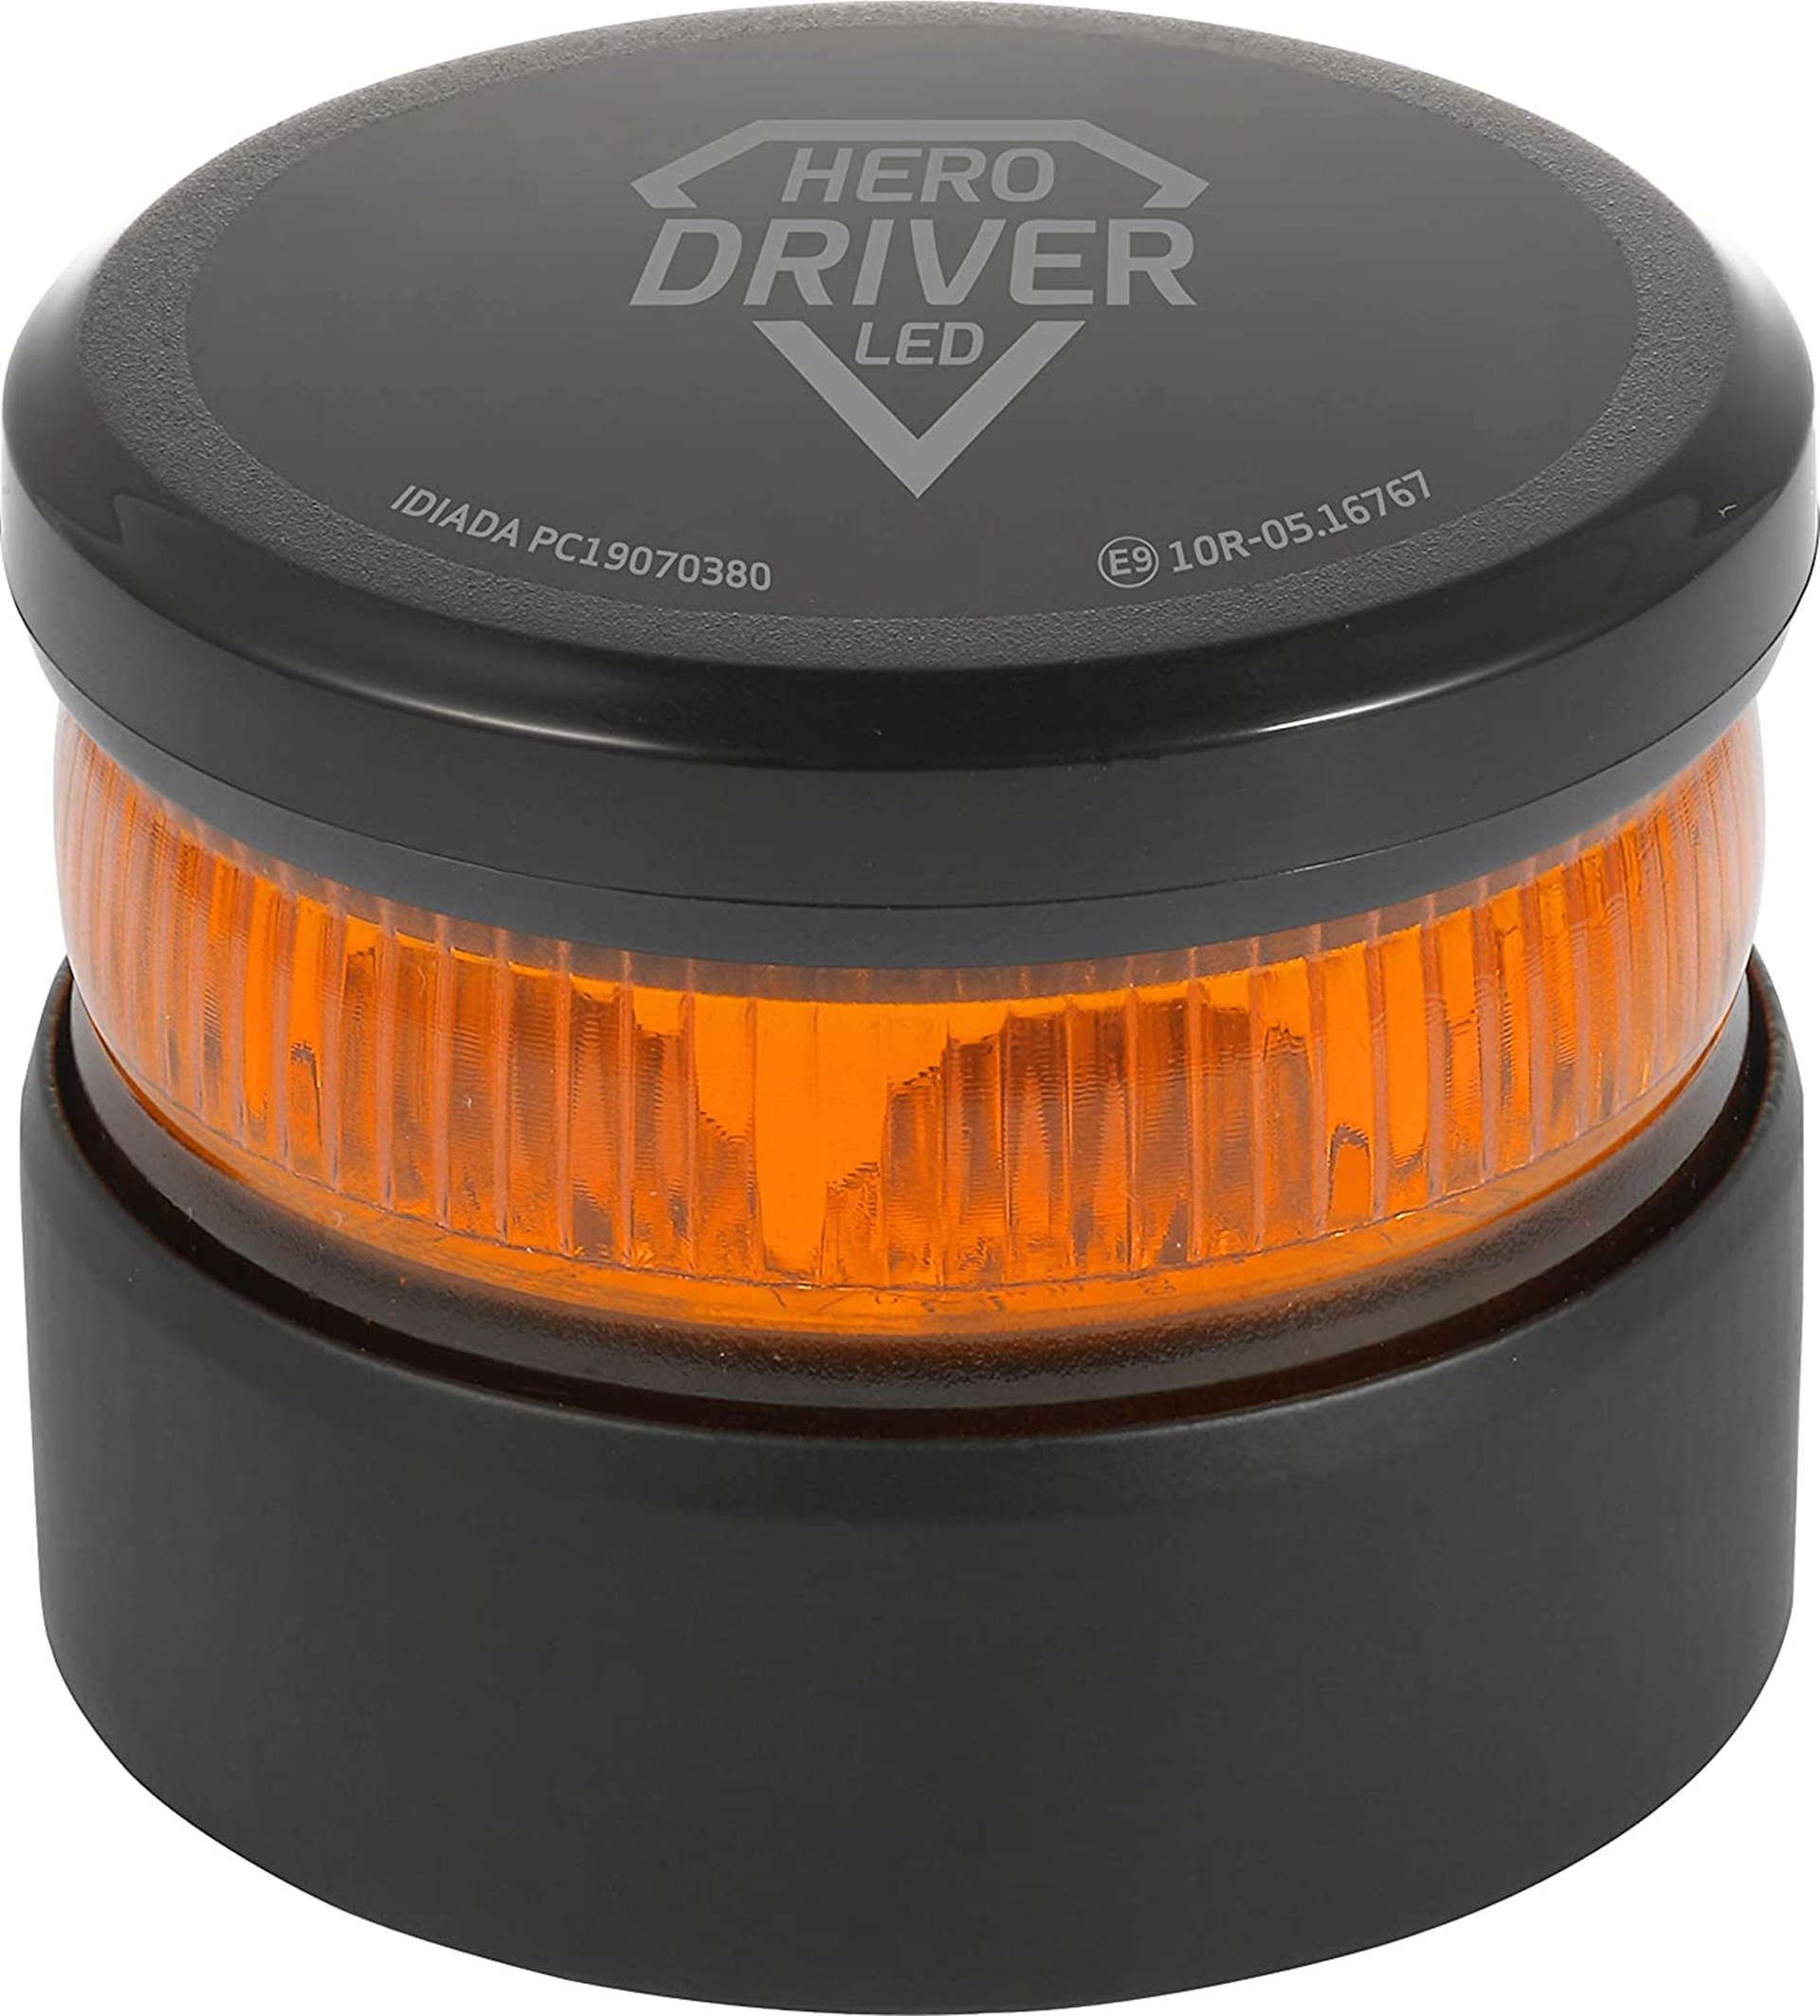 Mejores Luces Emergencia V 16 Hero Driver Led